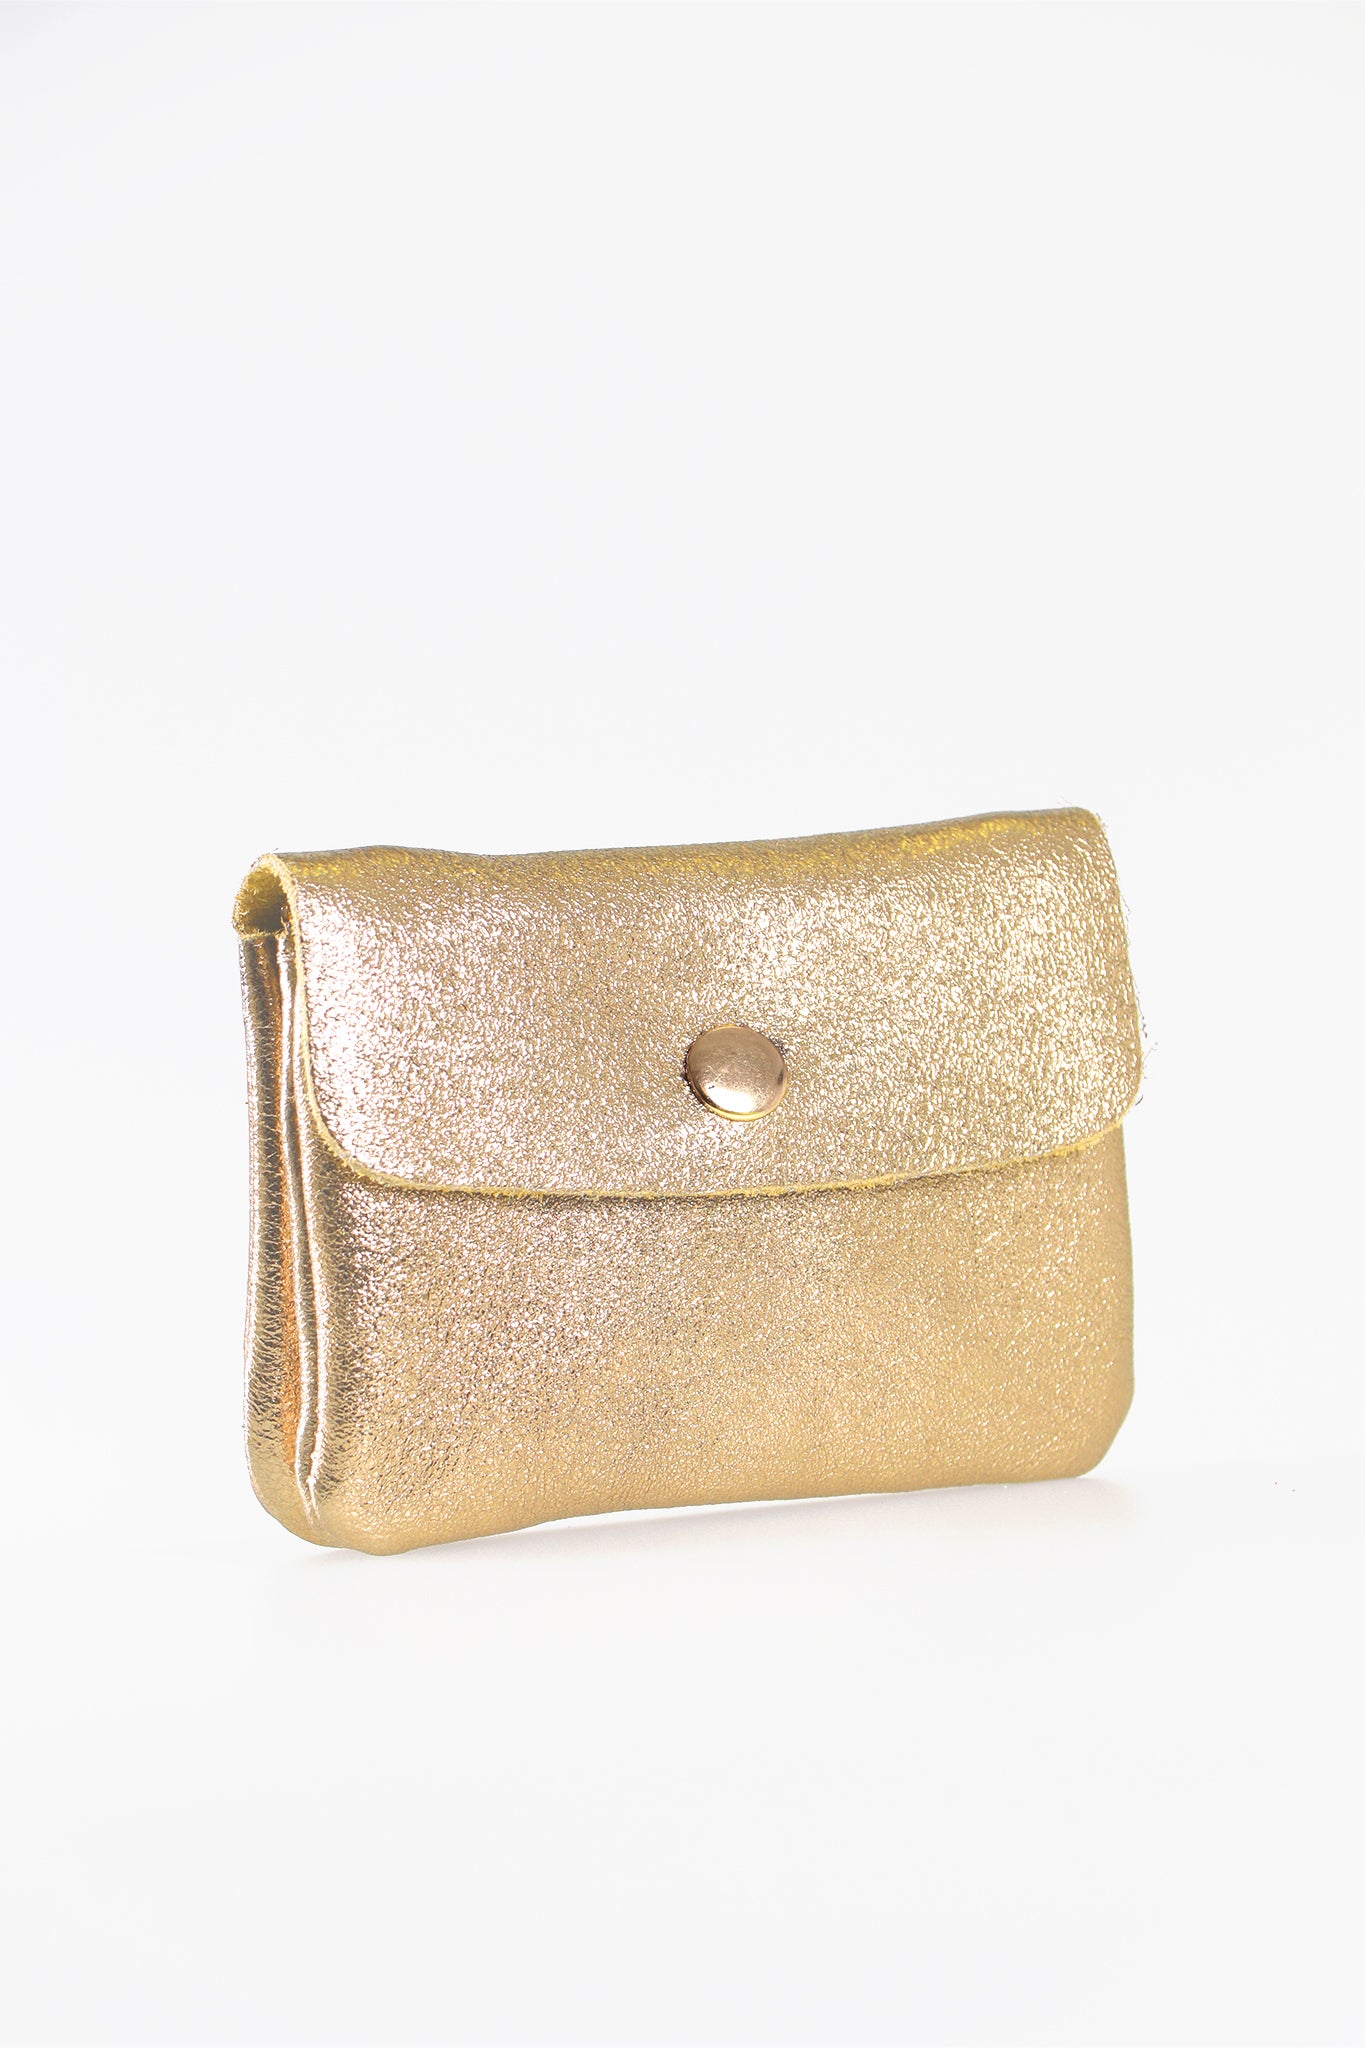 Leather Dumpling purse, soft gold leather crossbody handbag – Ginger and  Brown